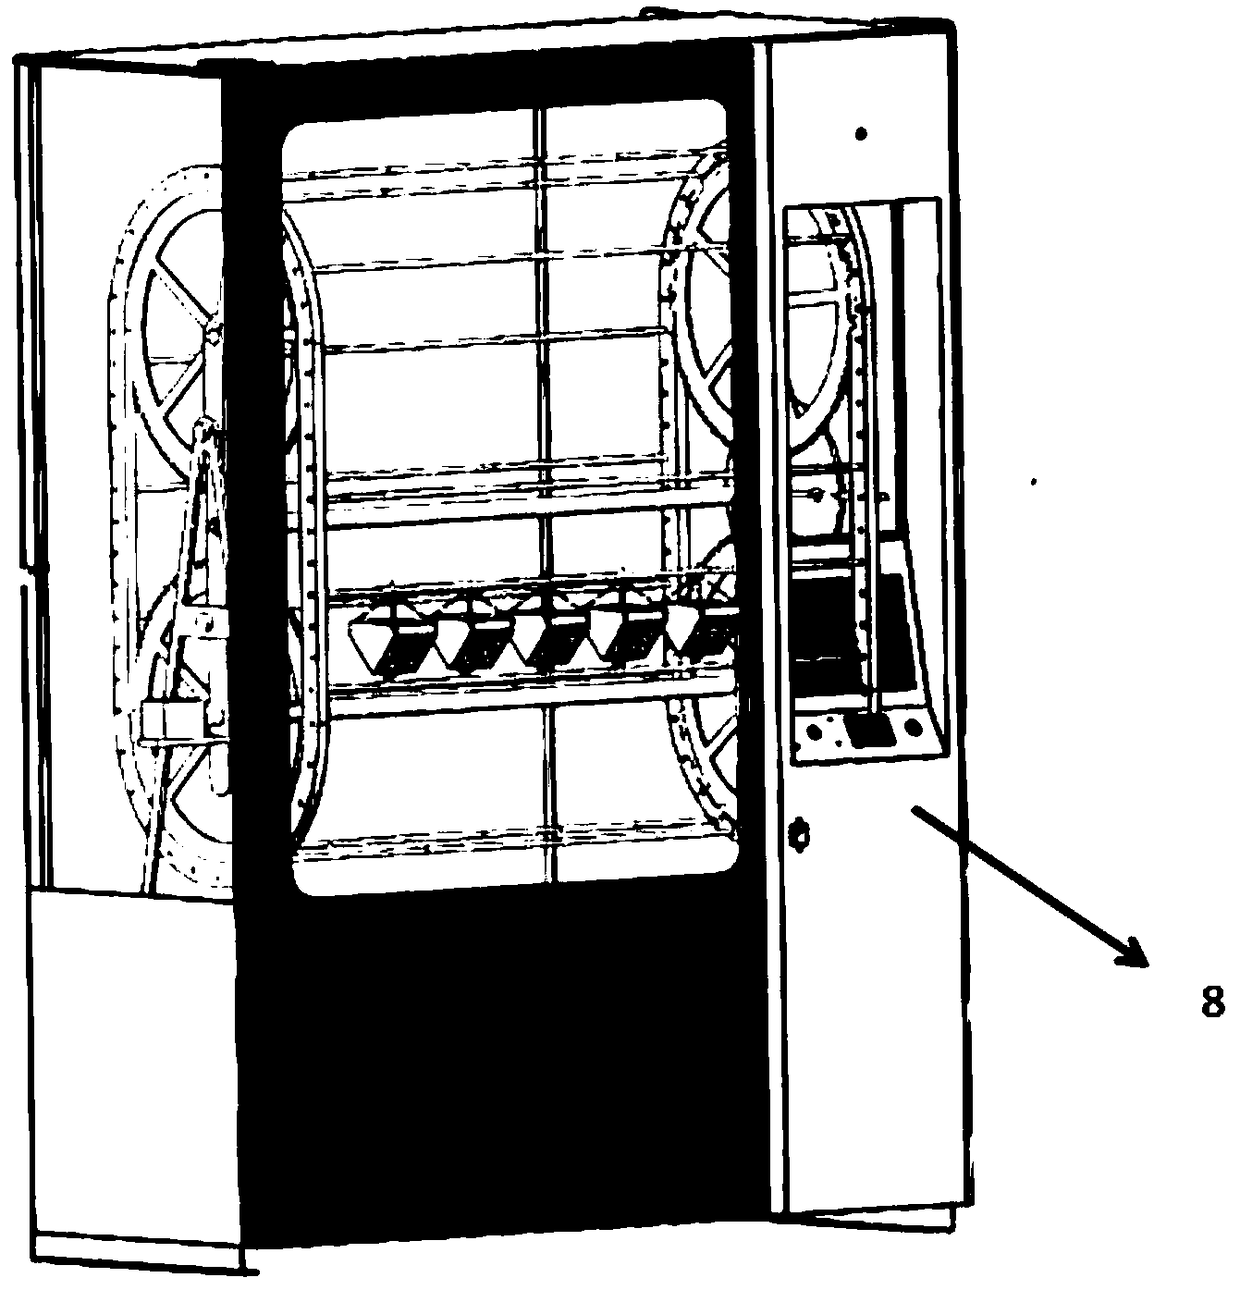 Novel dual-wheel linkage goods output device and vending machine